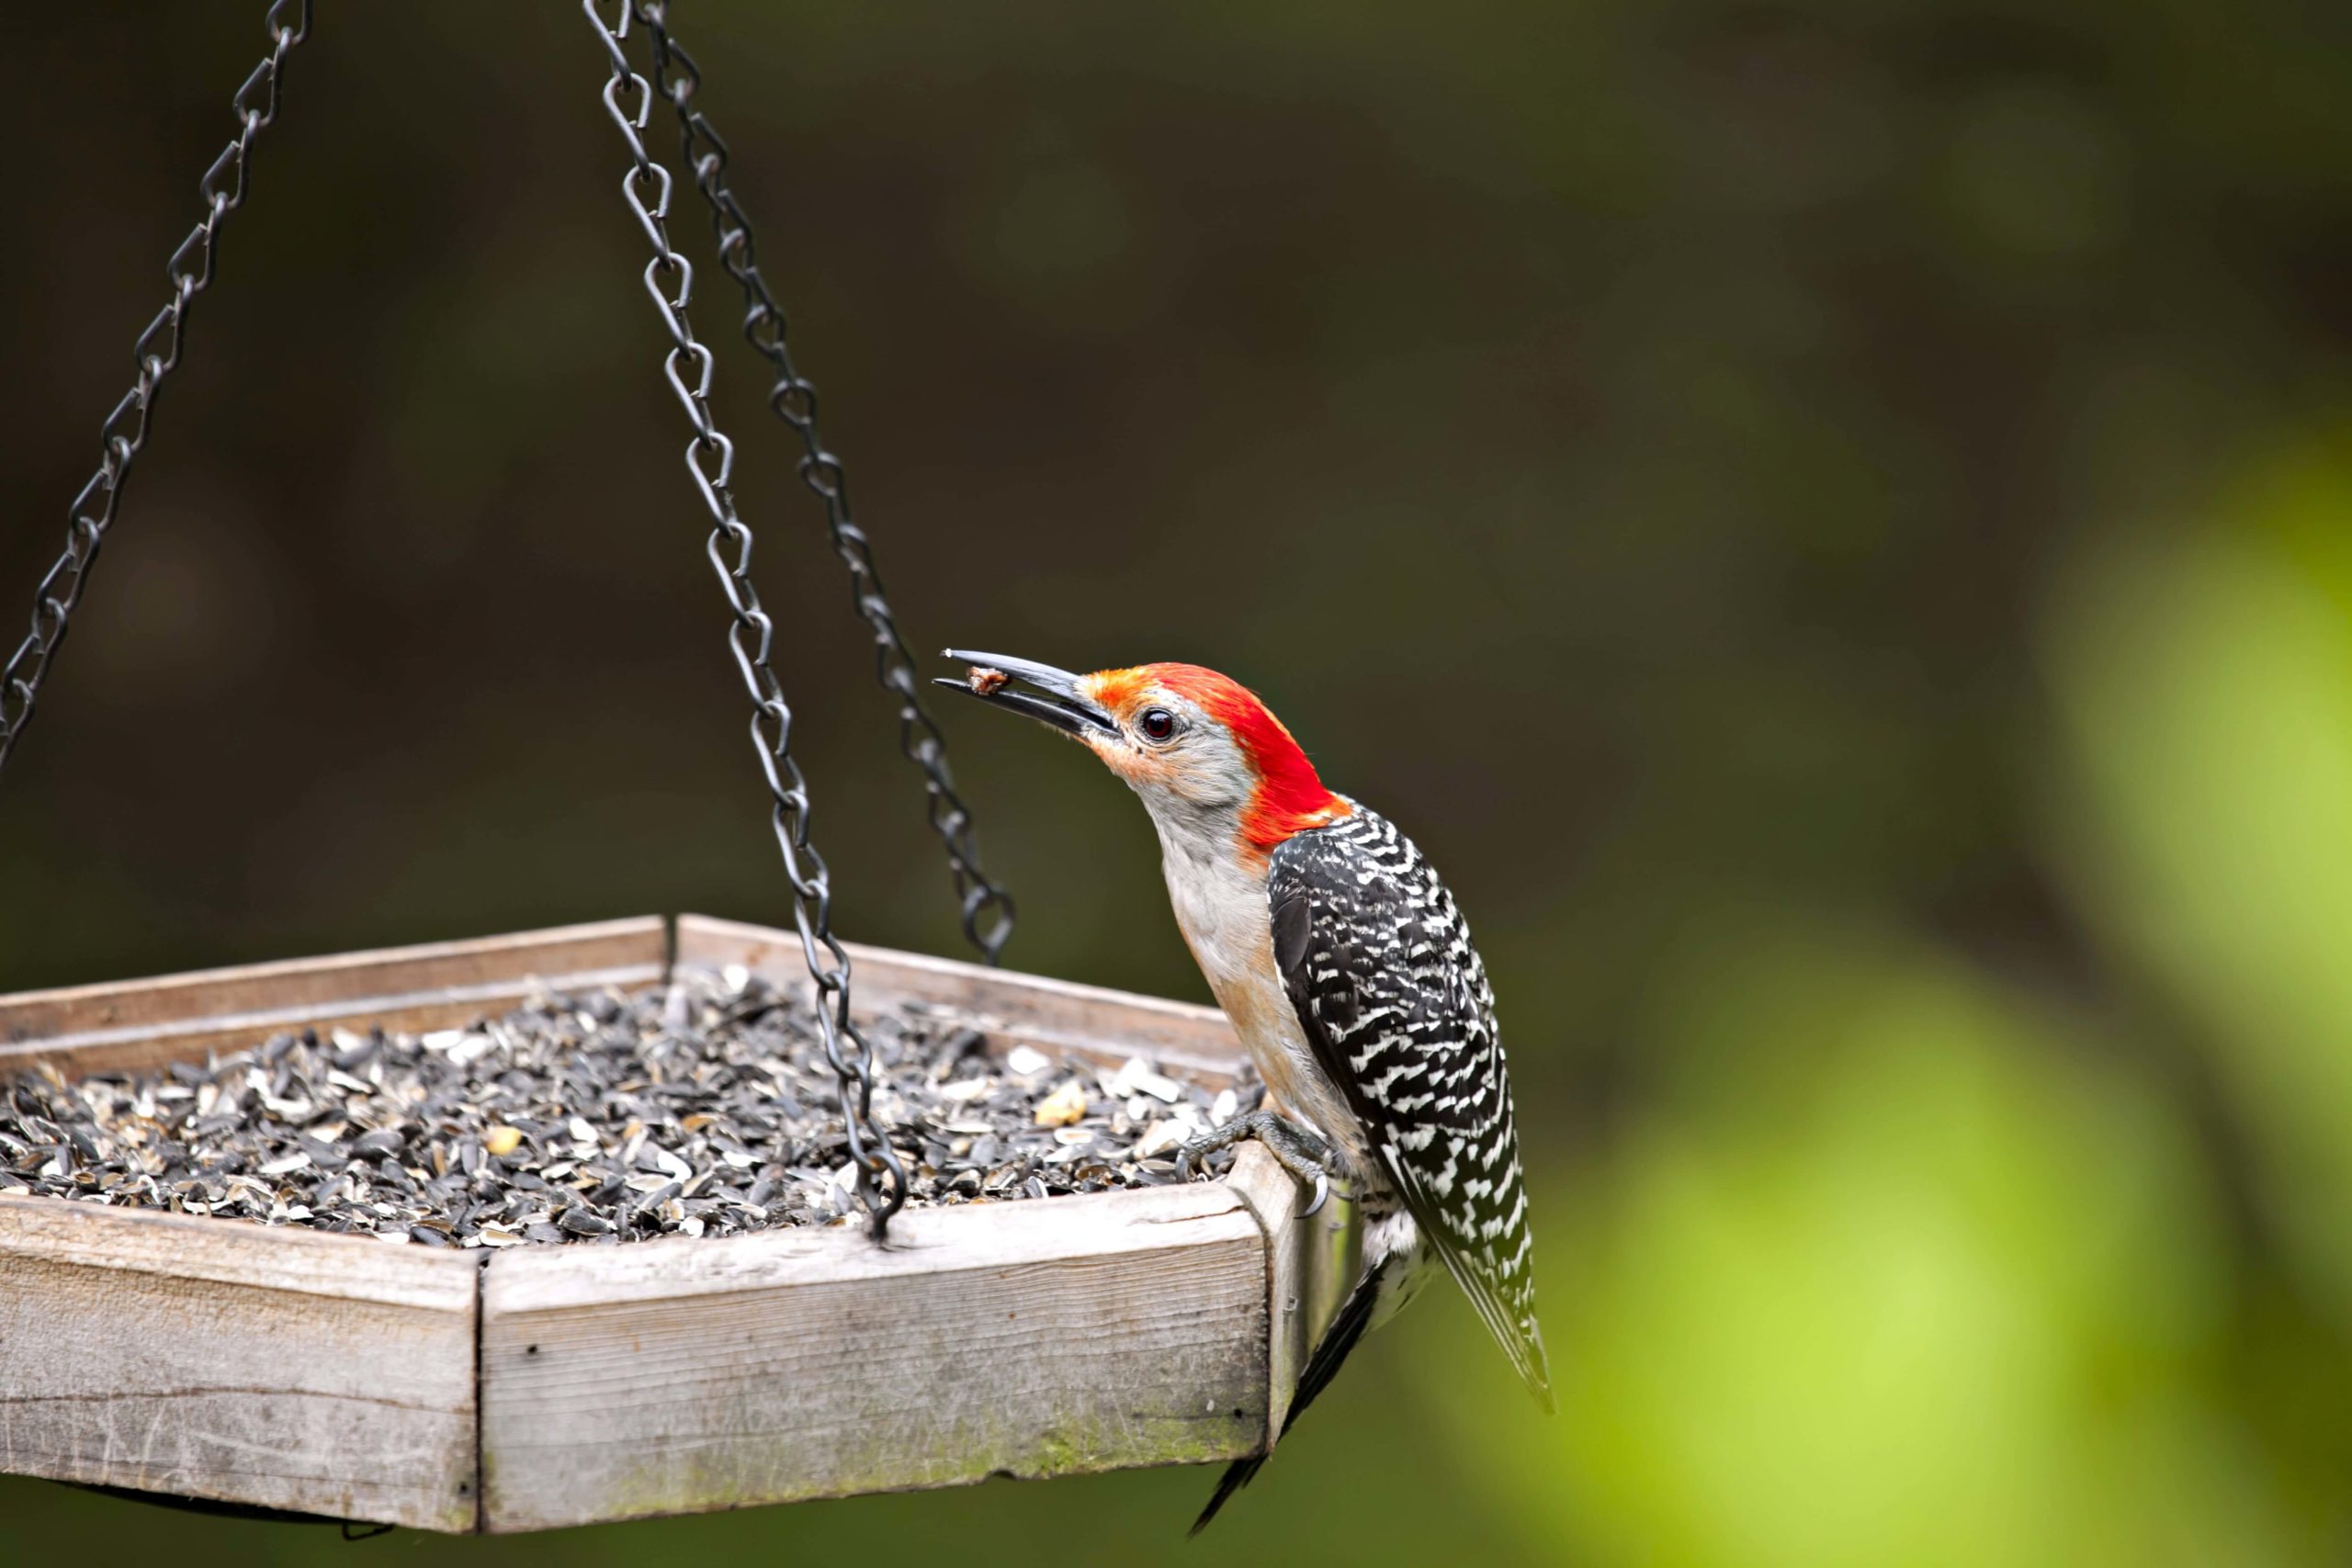 Tray bird feeder